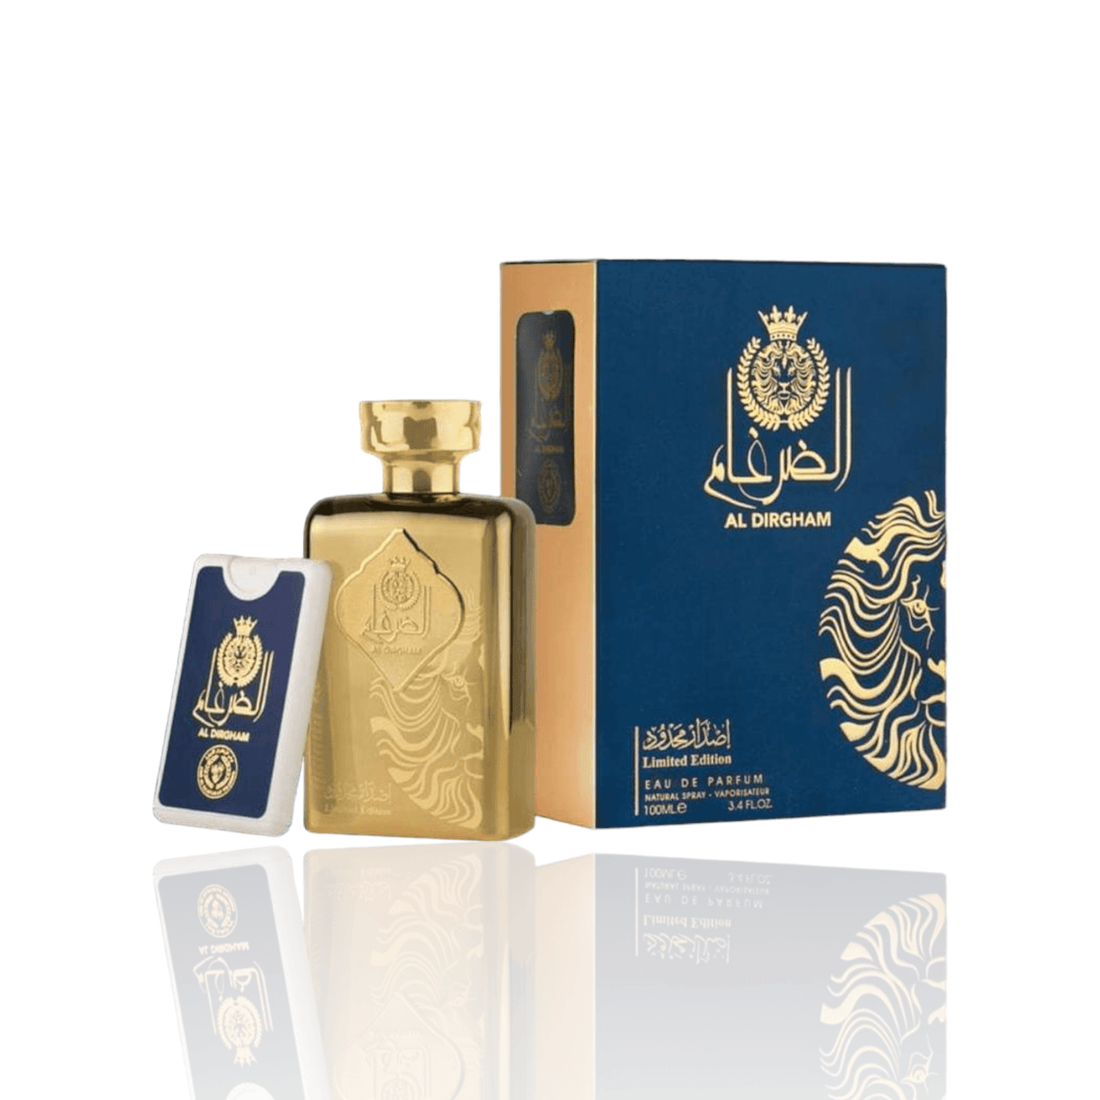 Luxury 100ml bottle of Al Dirgham Limited Edition Perfume by Ard Al Zaafaran, showcasing its exotic fruit and floral essence.